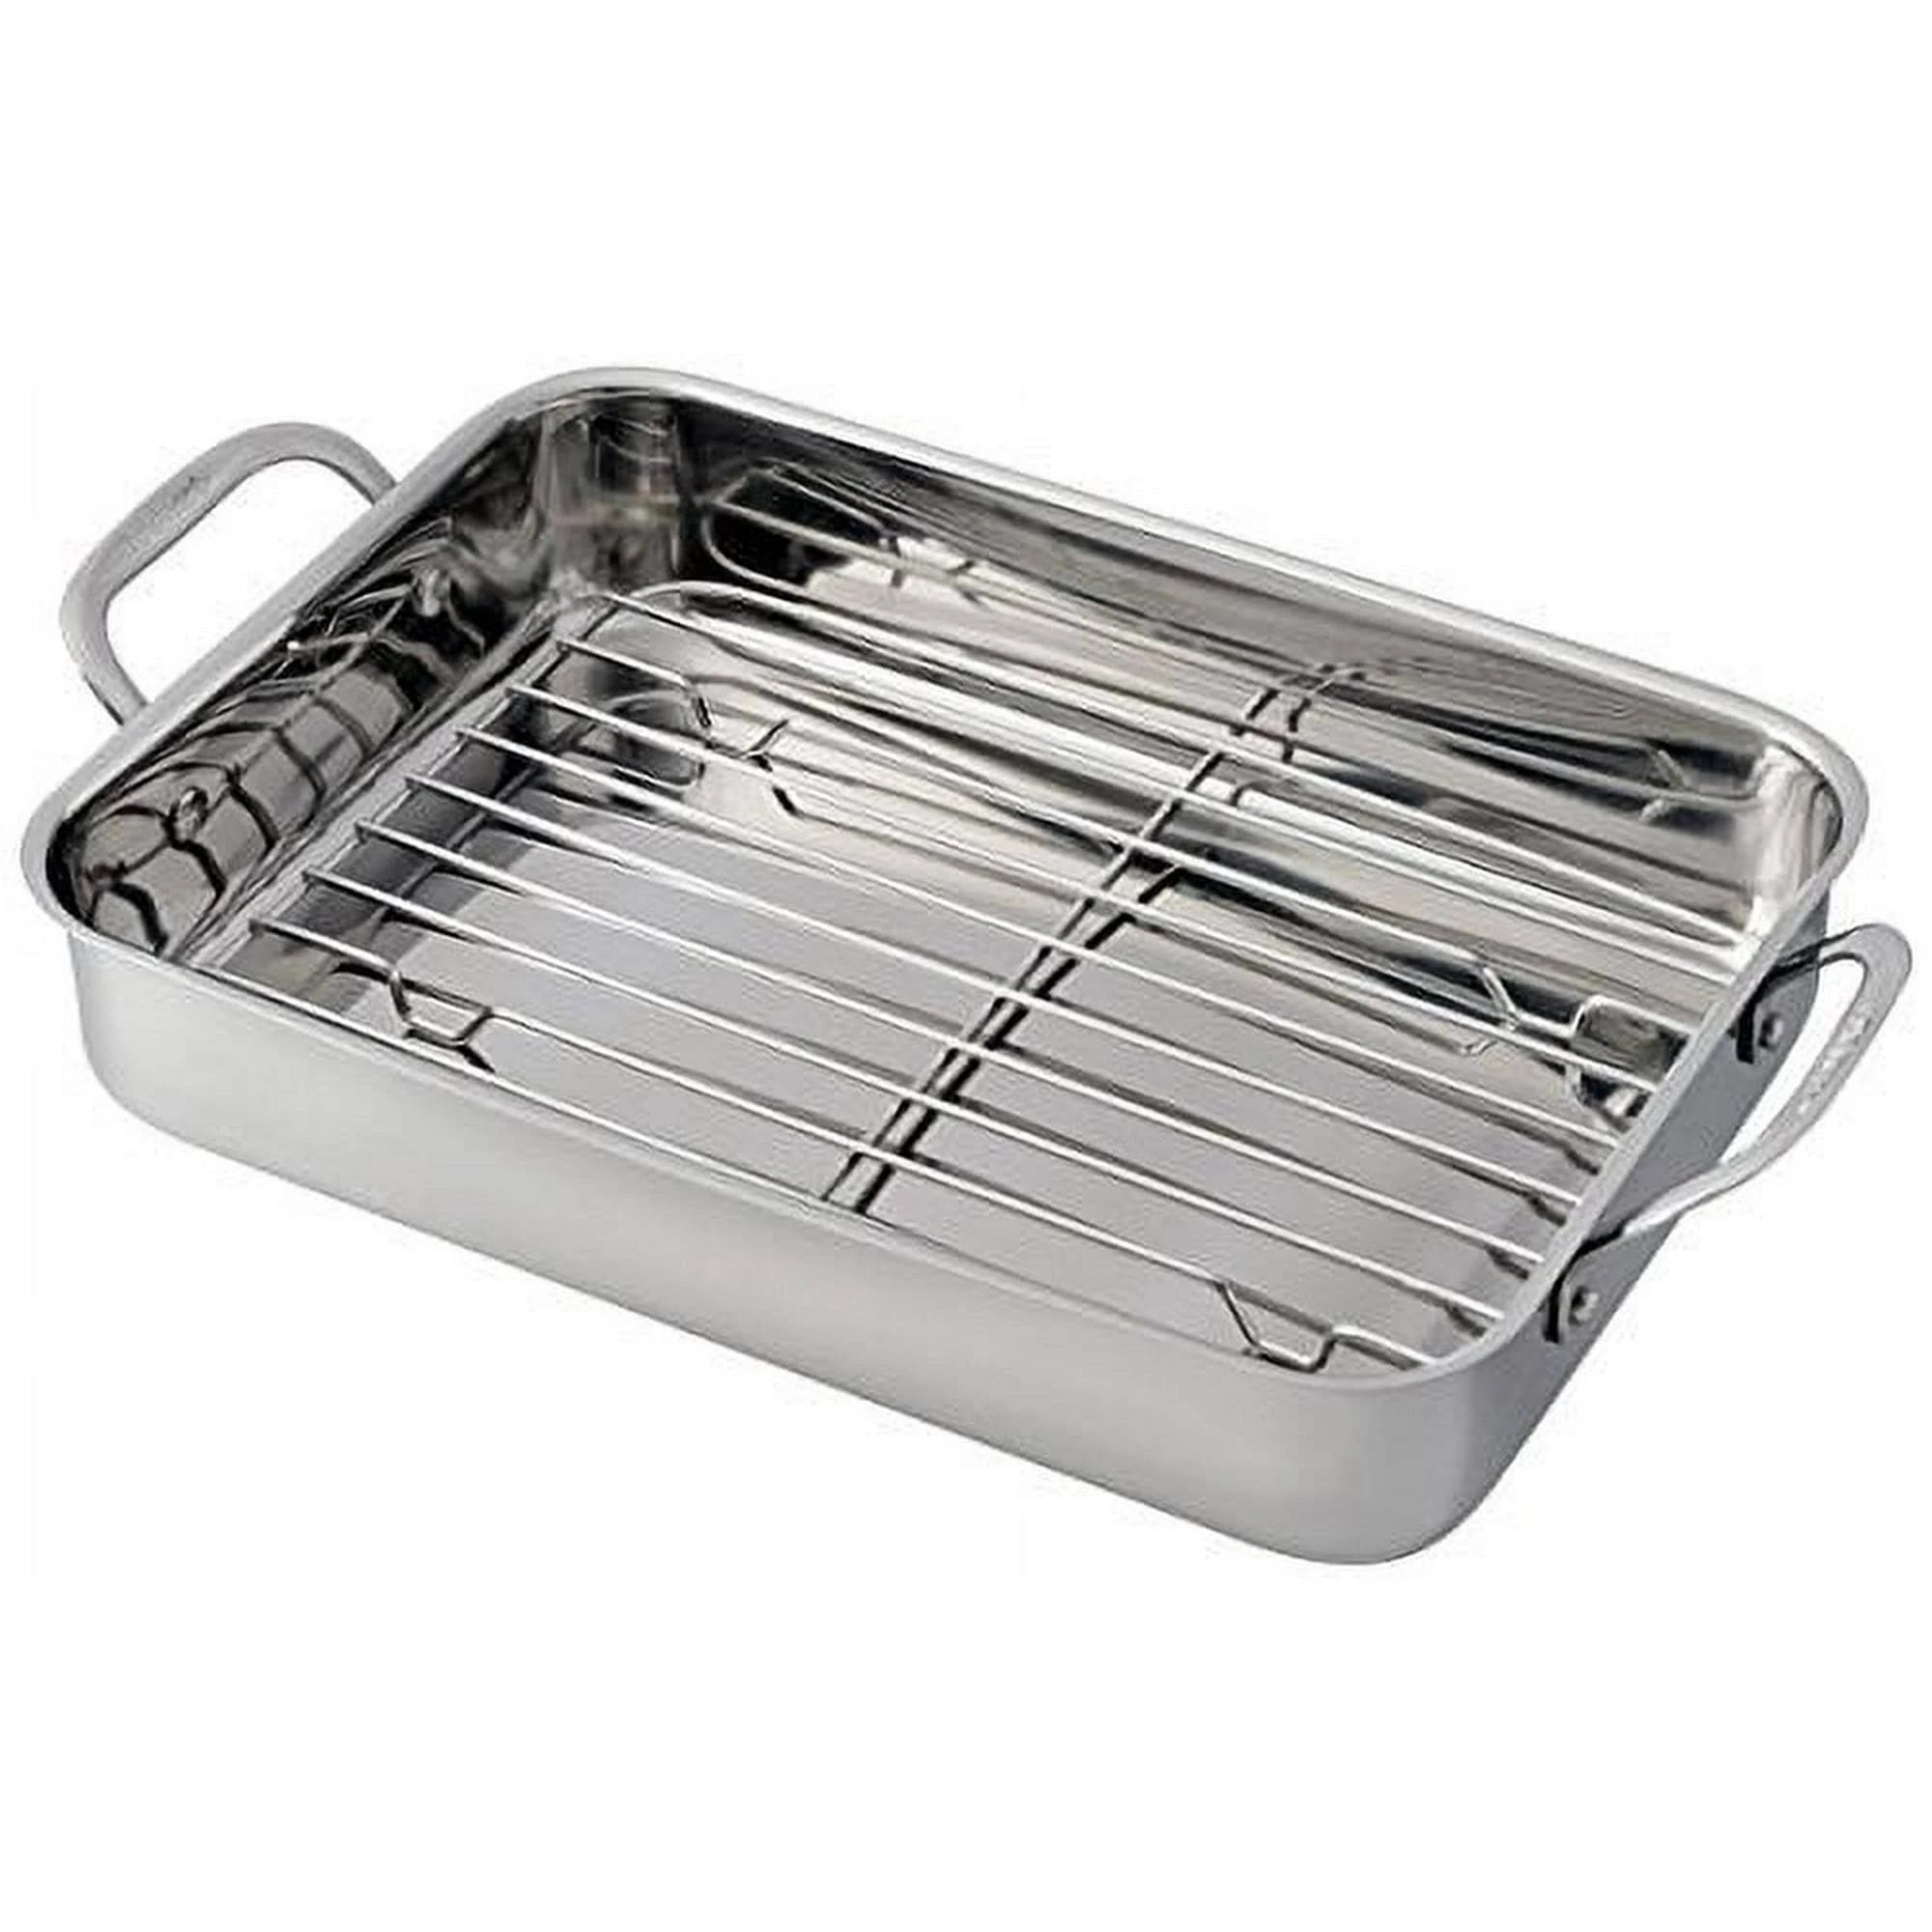 Cuisinart Stainless Steel Lasagna Pan with Roasting Rack | Image